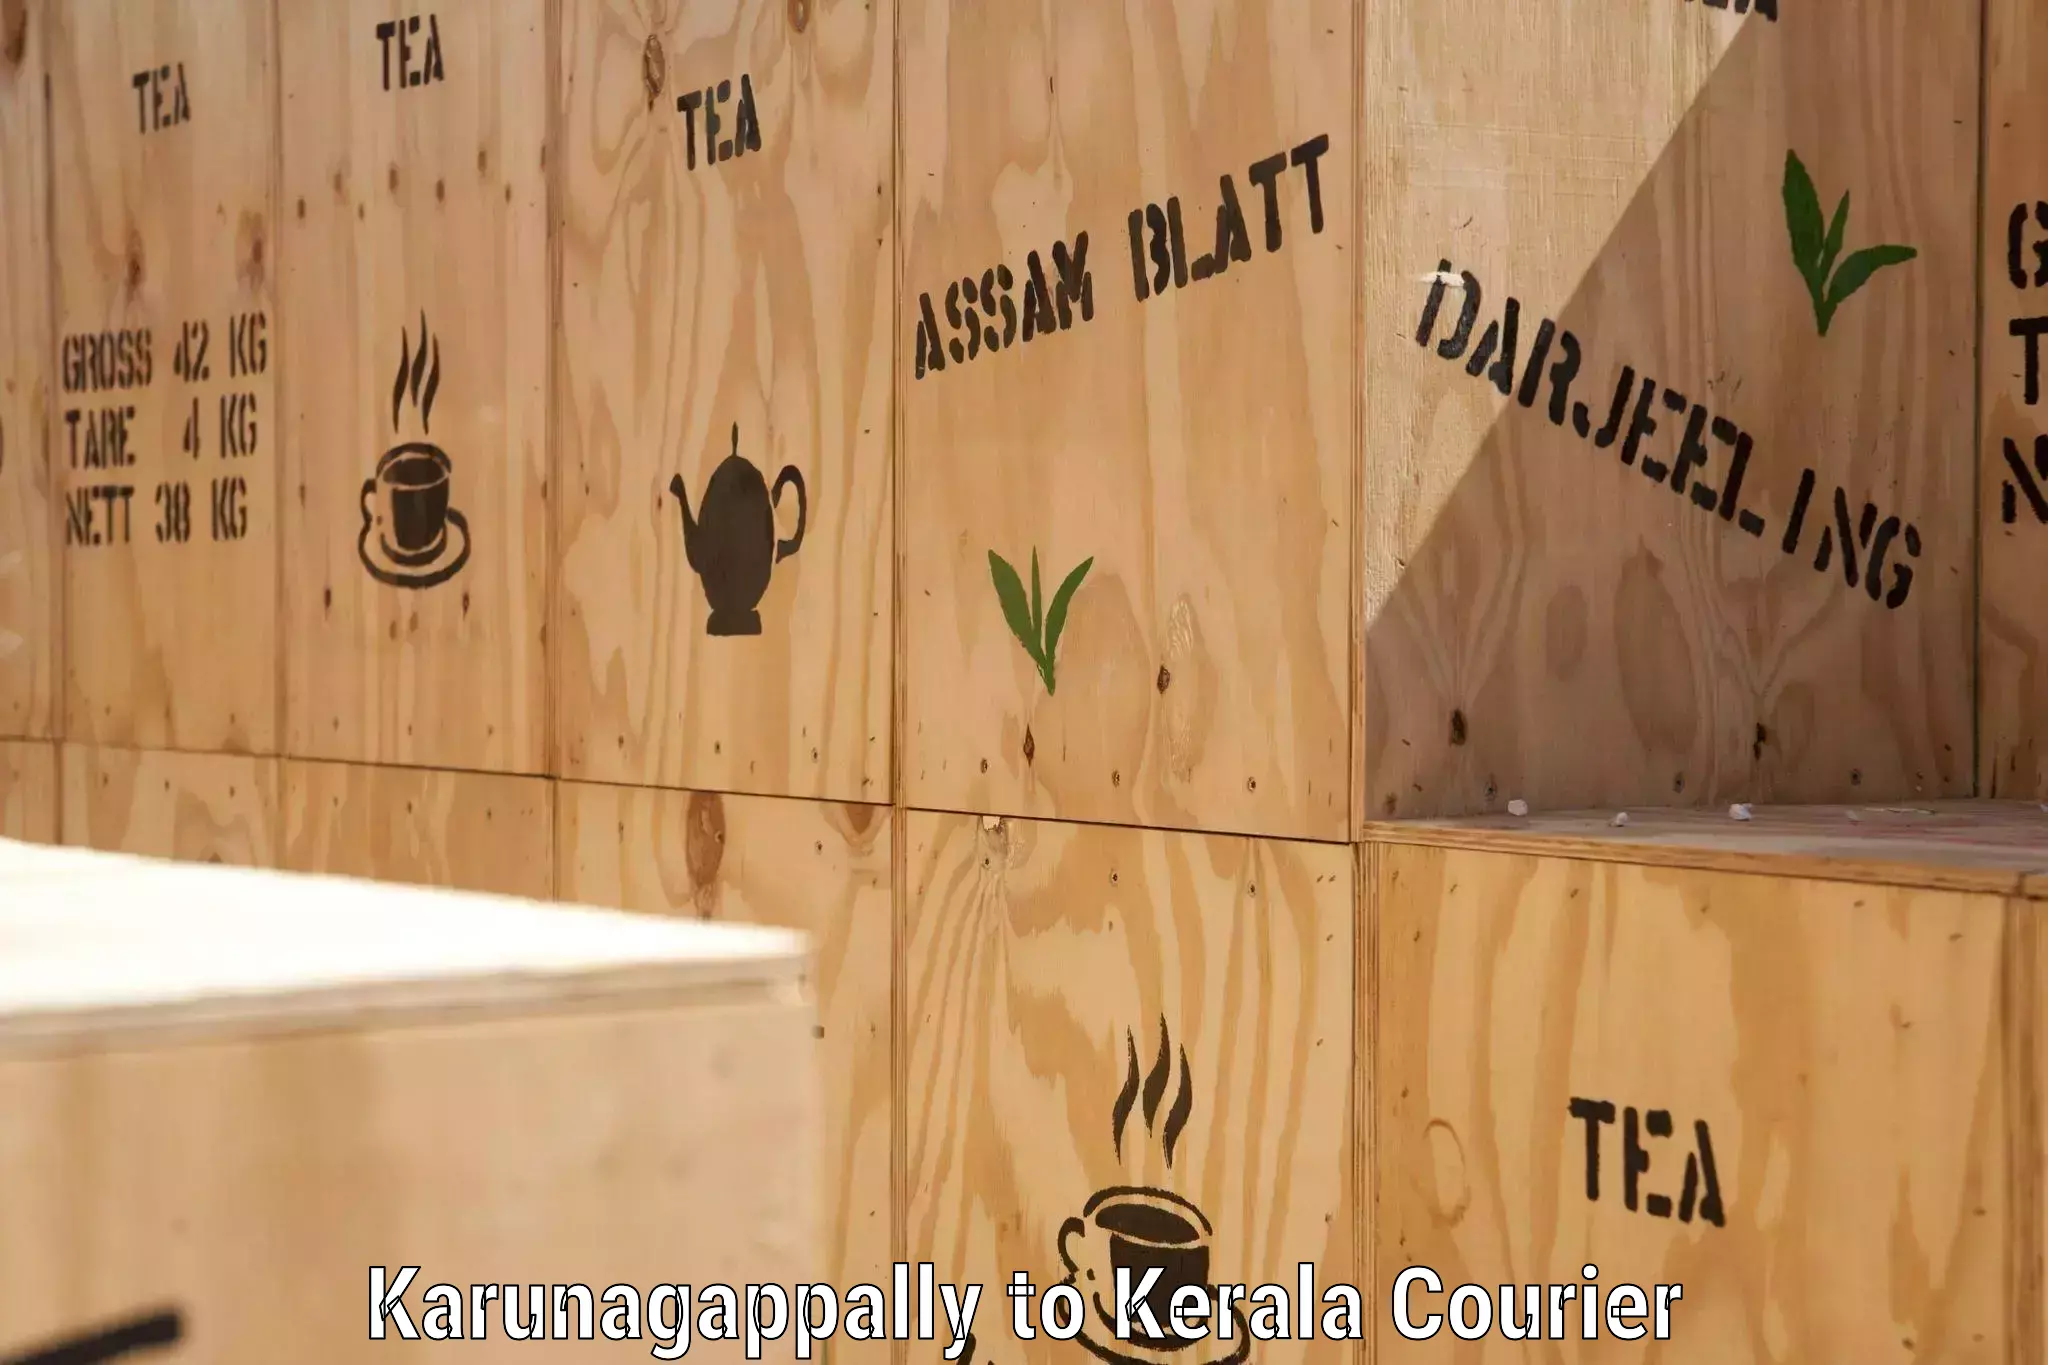 Digital courier platforms Karunagappally to Kilimanoor